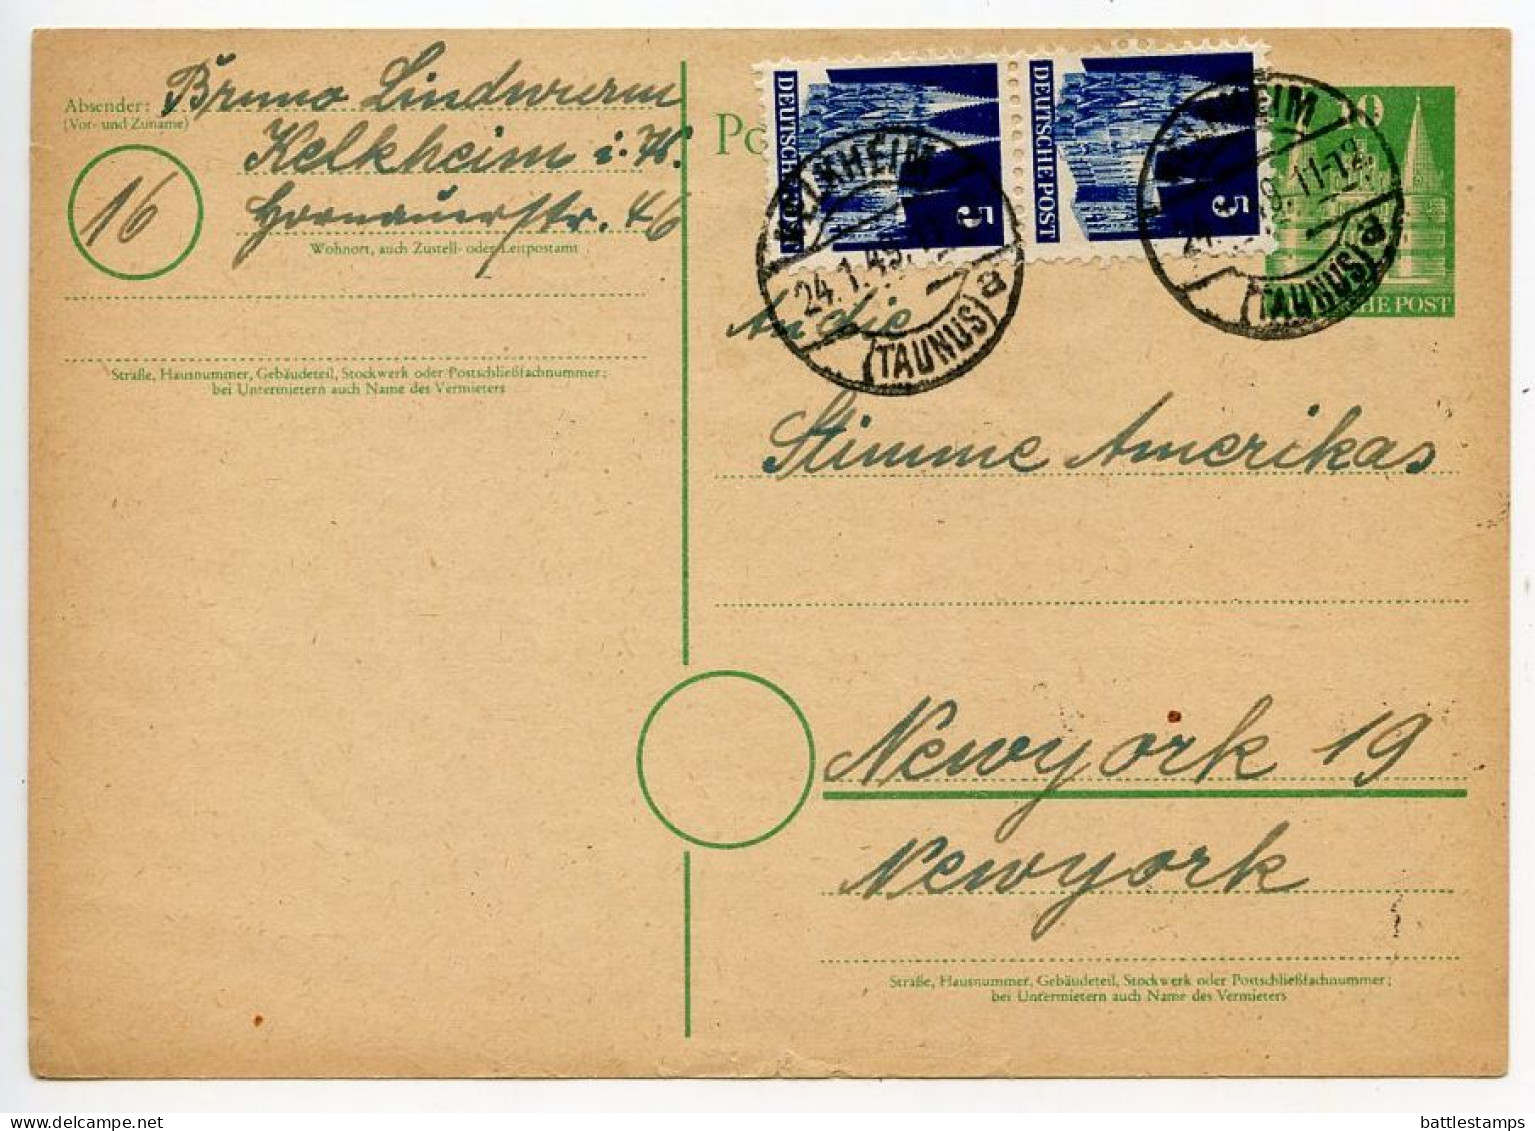 Germany 1949 Uprated 10pf. Holsten Gate Postal Card; Helkheim To New York, NY - Entiers Postaux